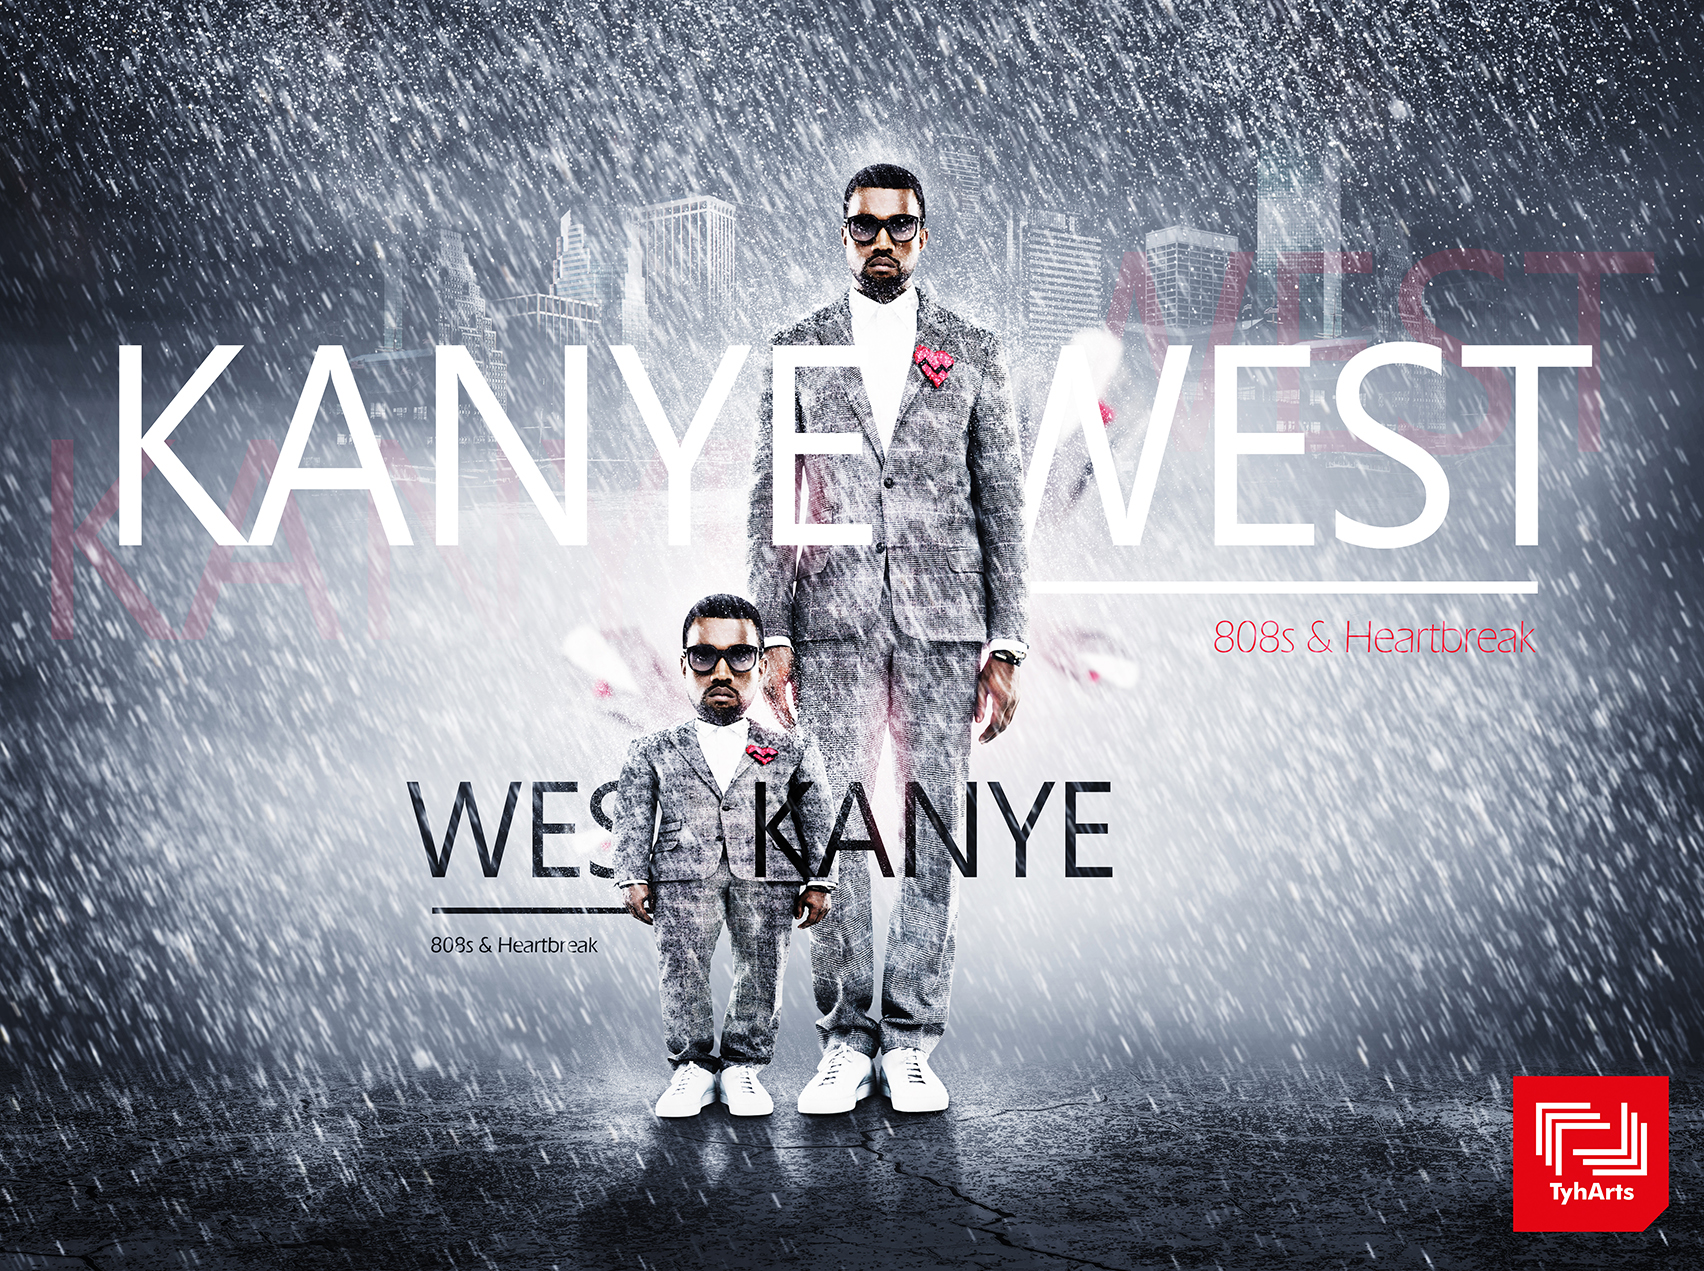 Kanye West 808s & Heartbreak Part 1 small